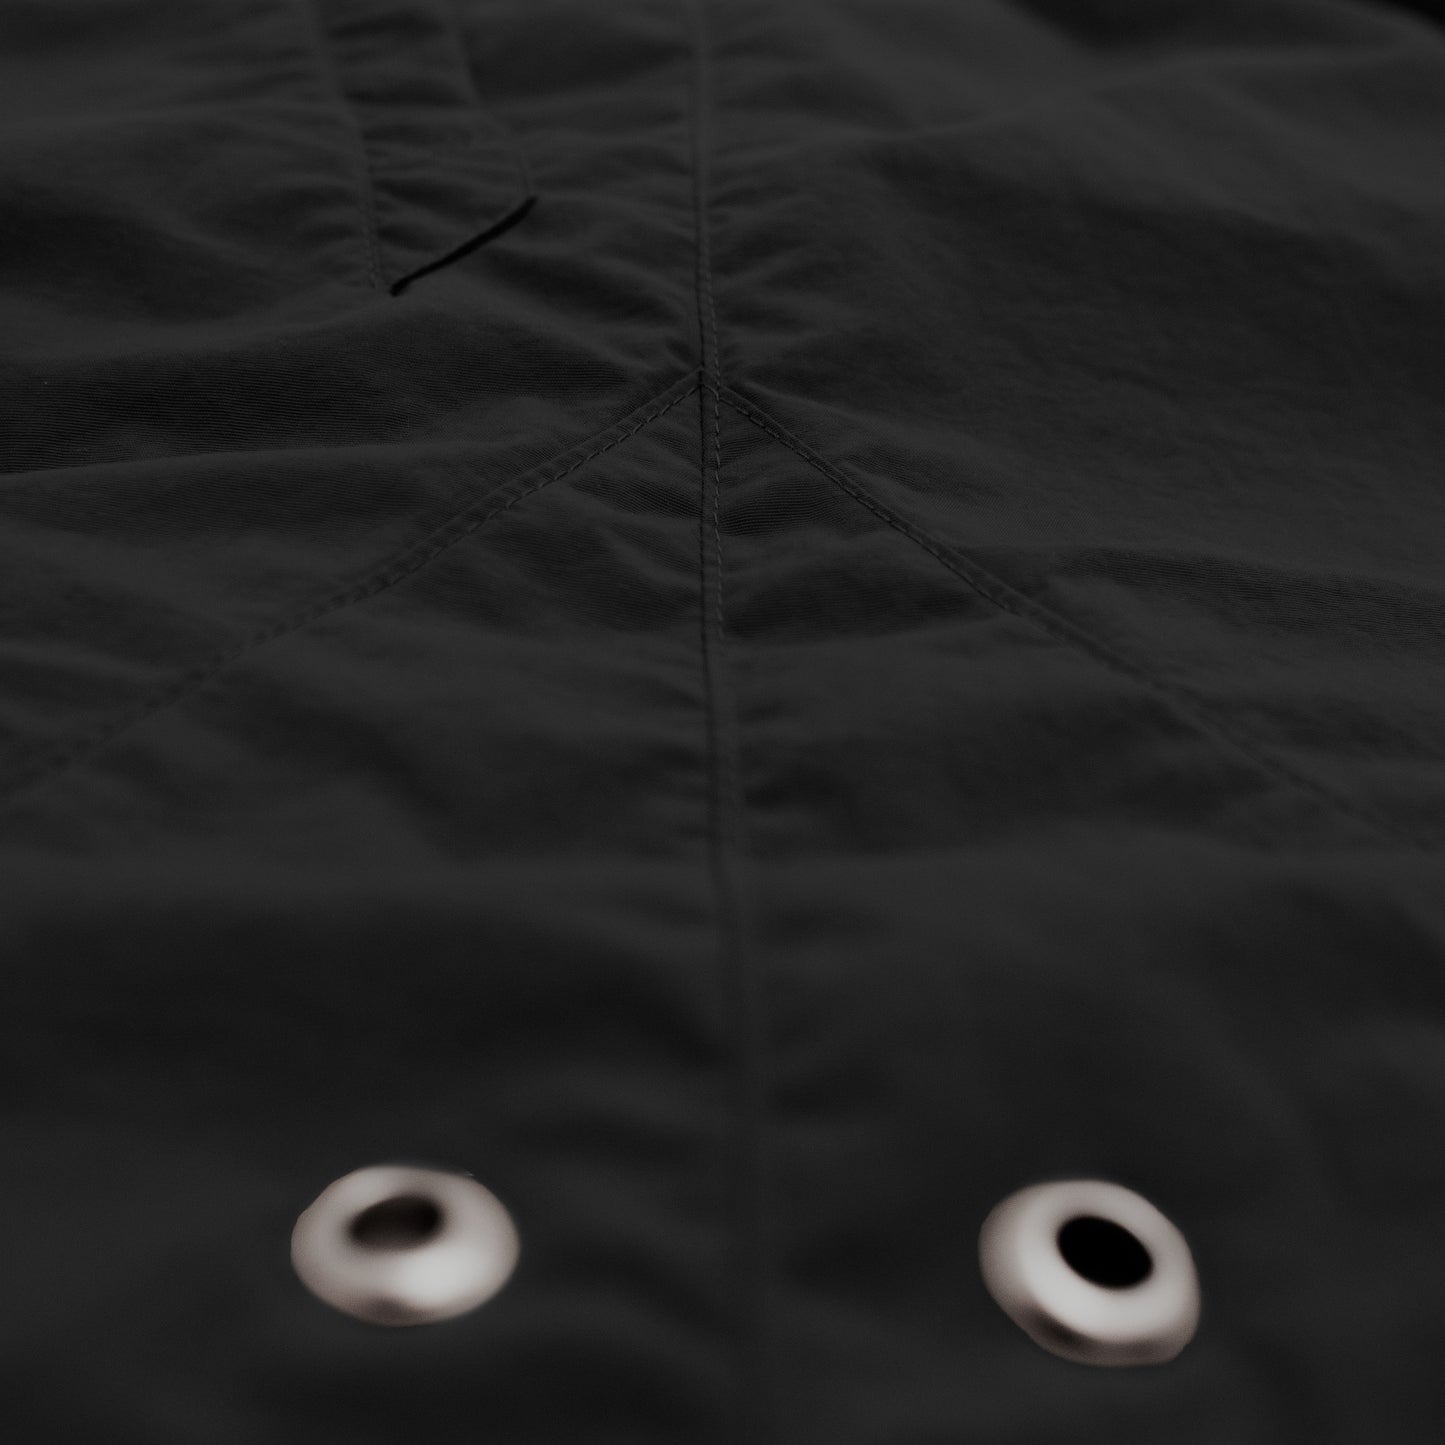 Technical A-Panel Nylon Shorts